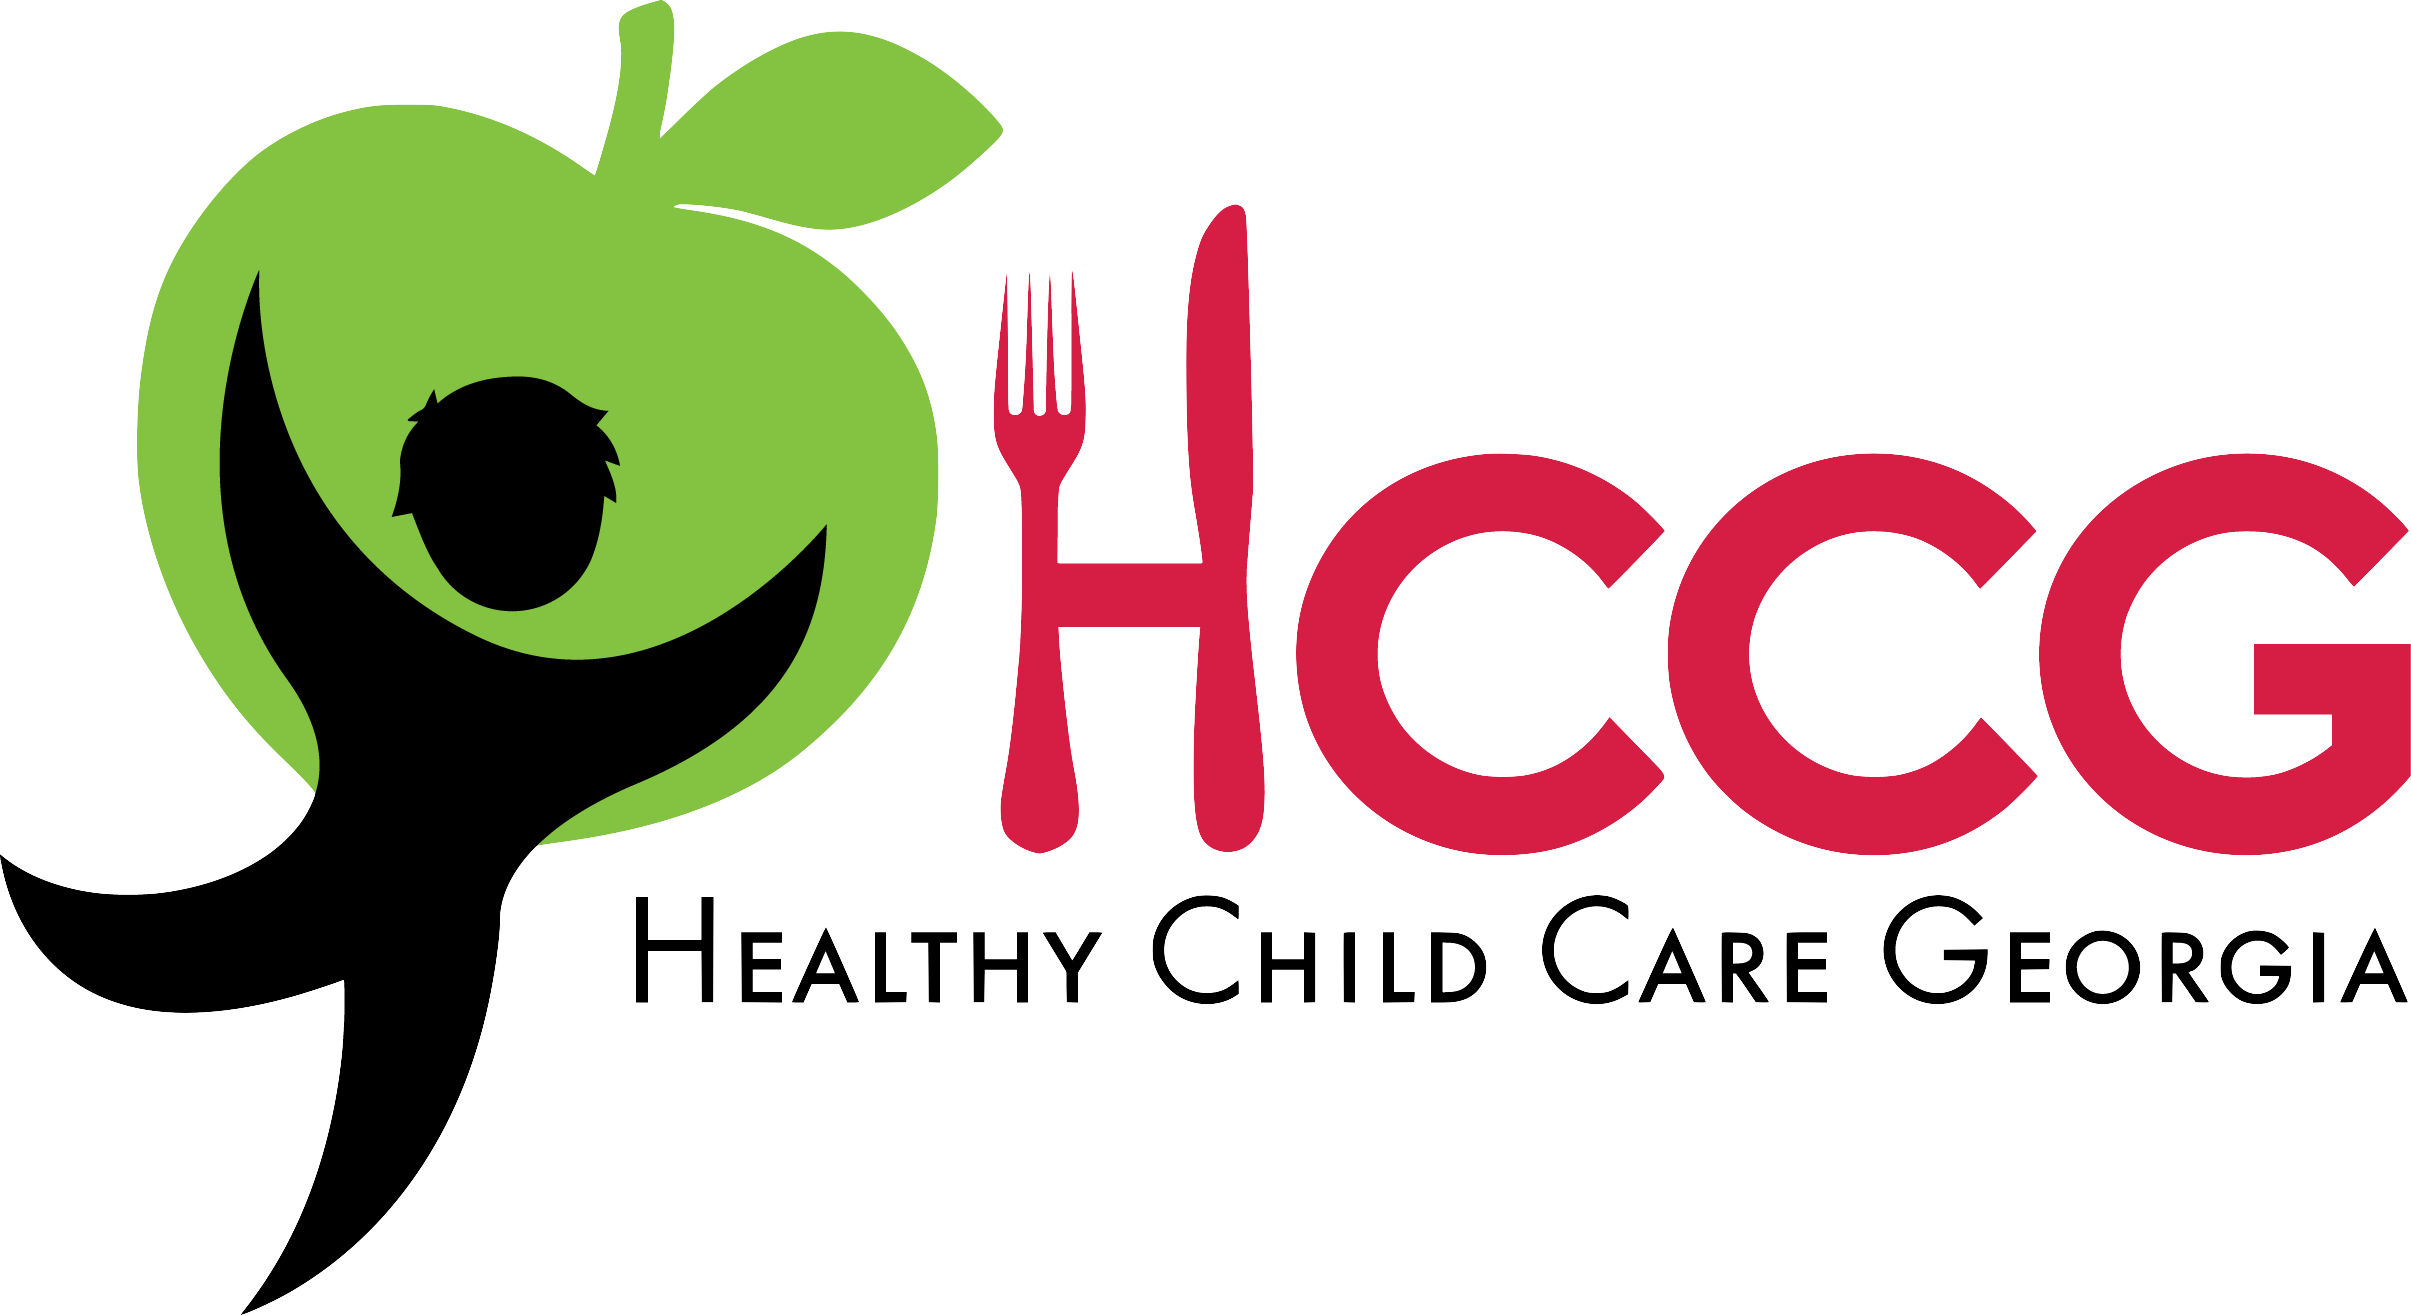 Hccg logo